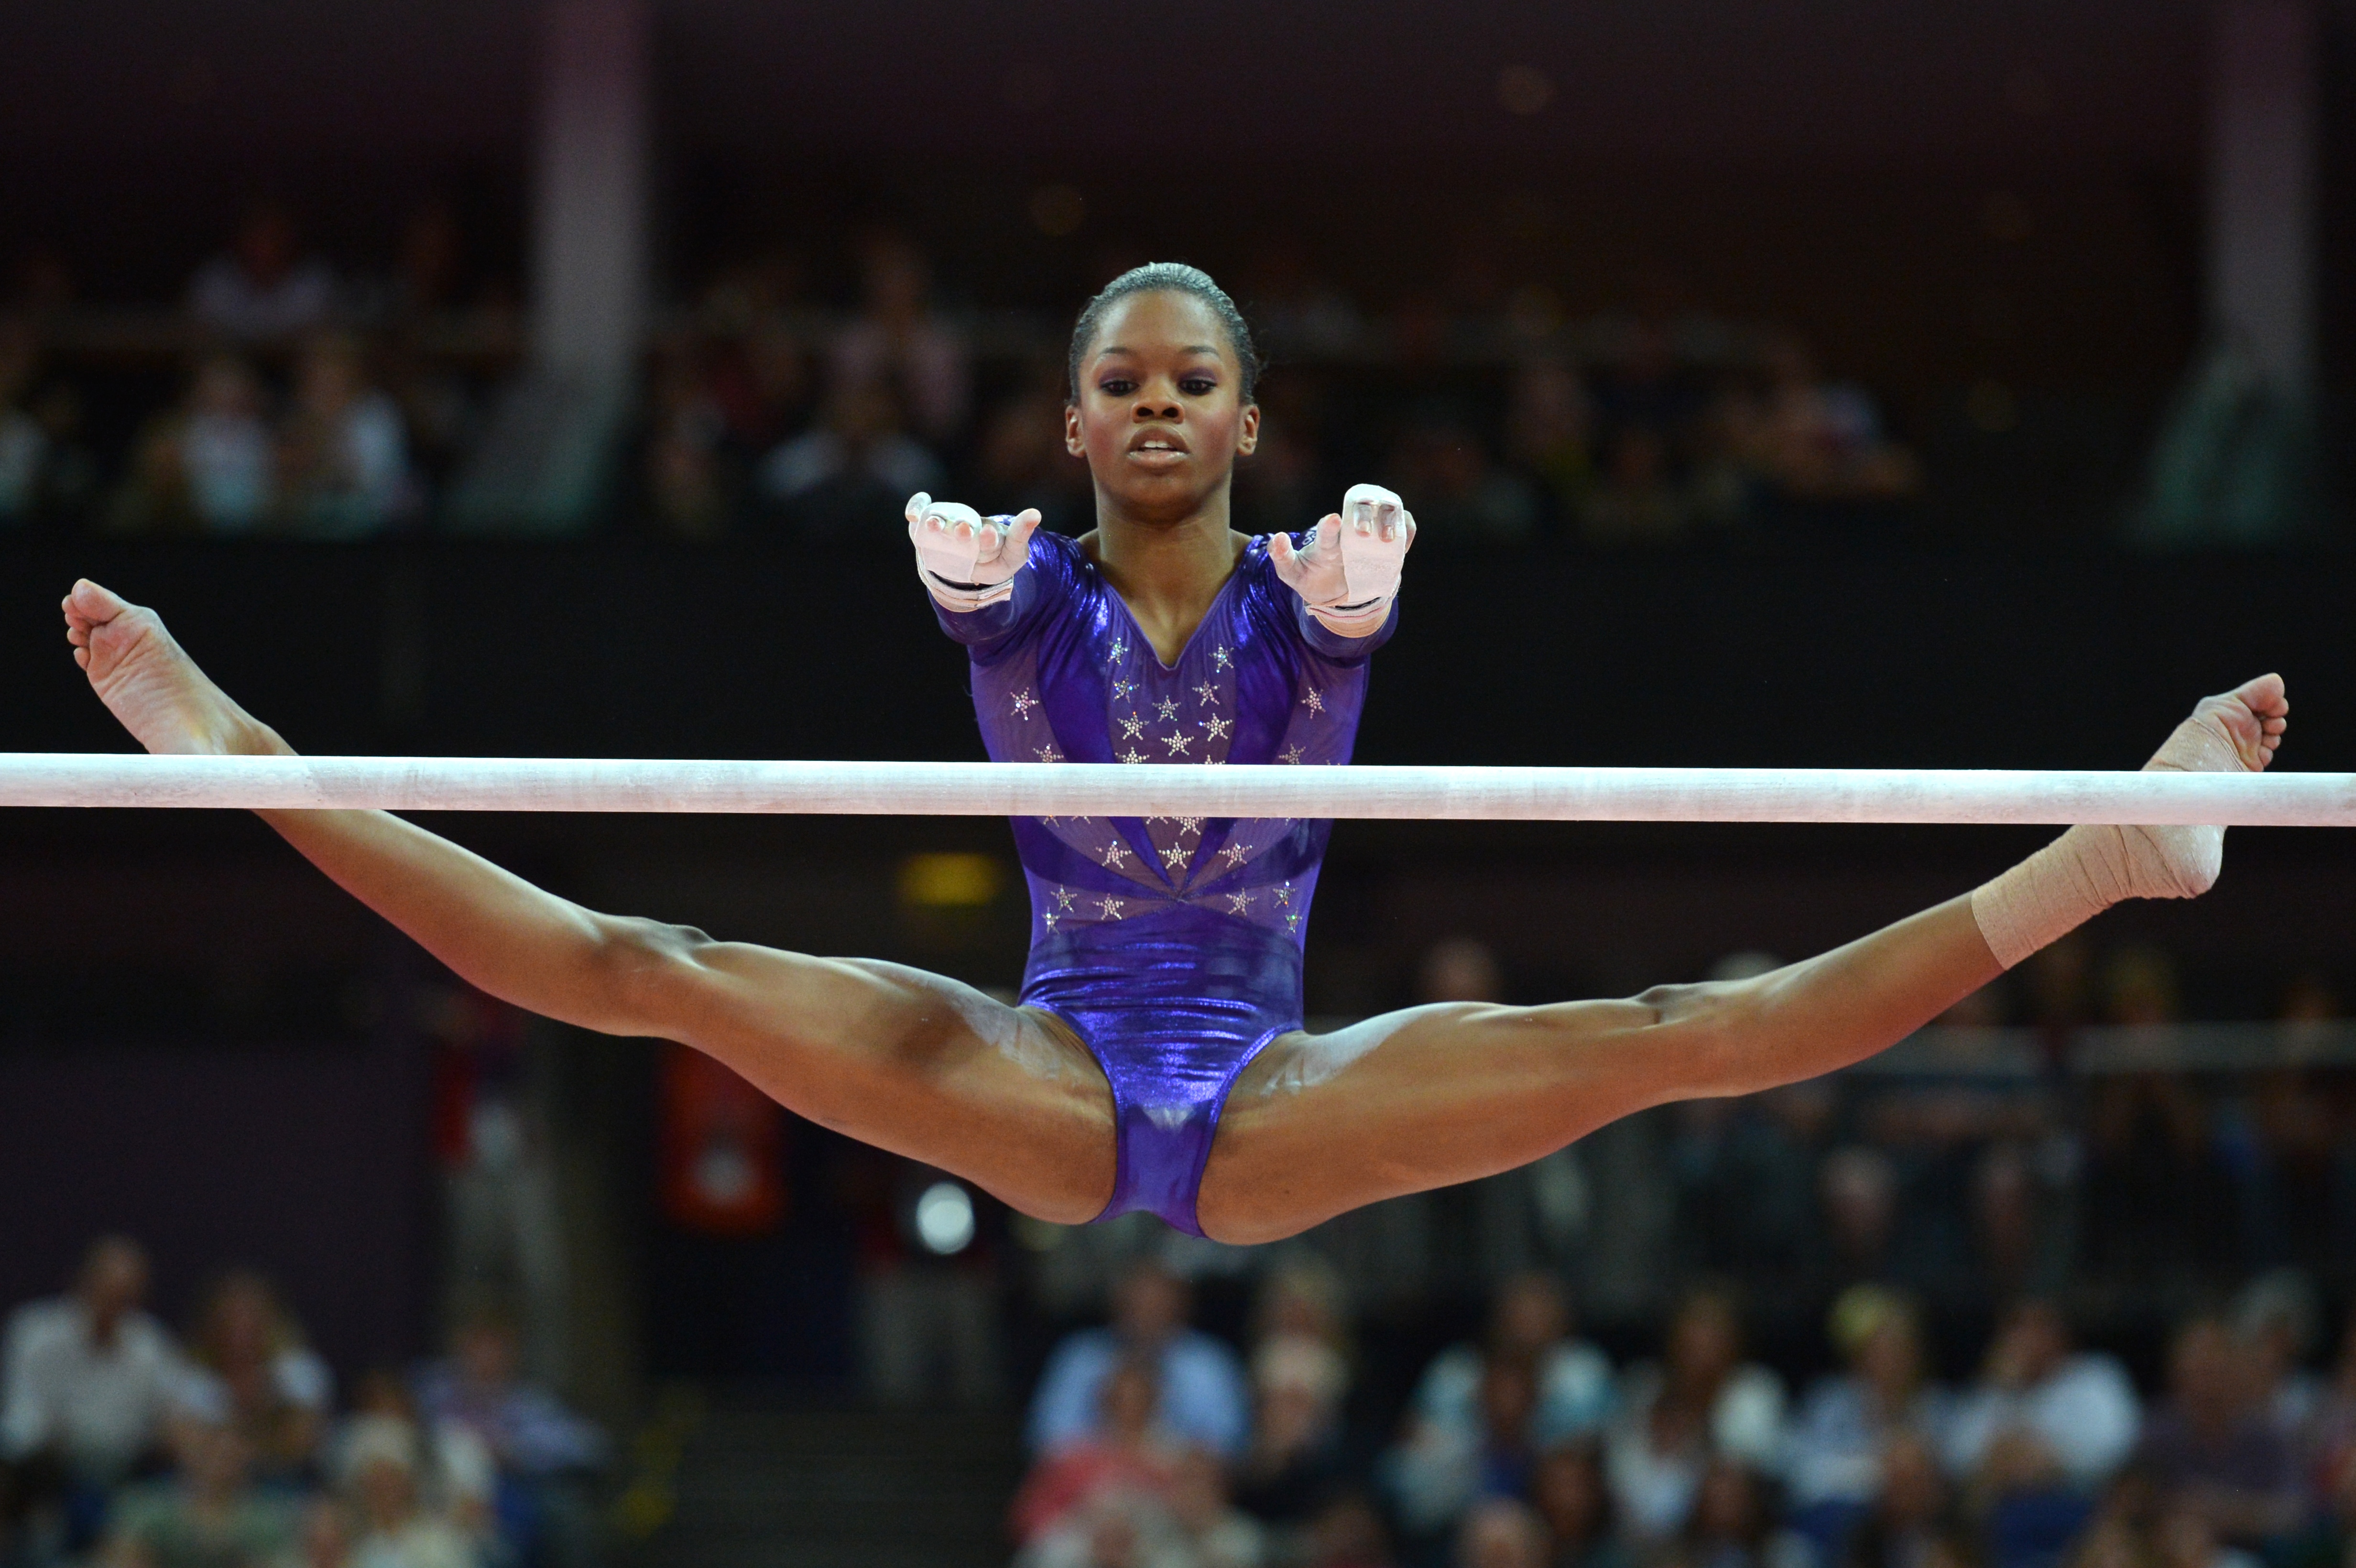 Olympics Gymnastics Uniforms: See 108-Year Style Evolution